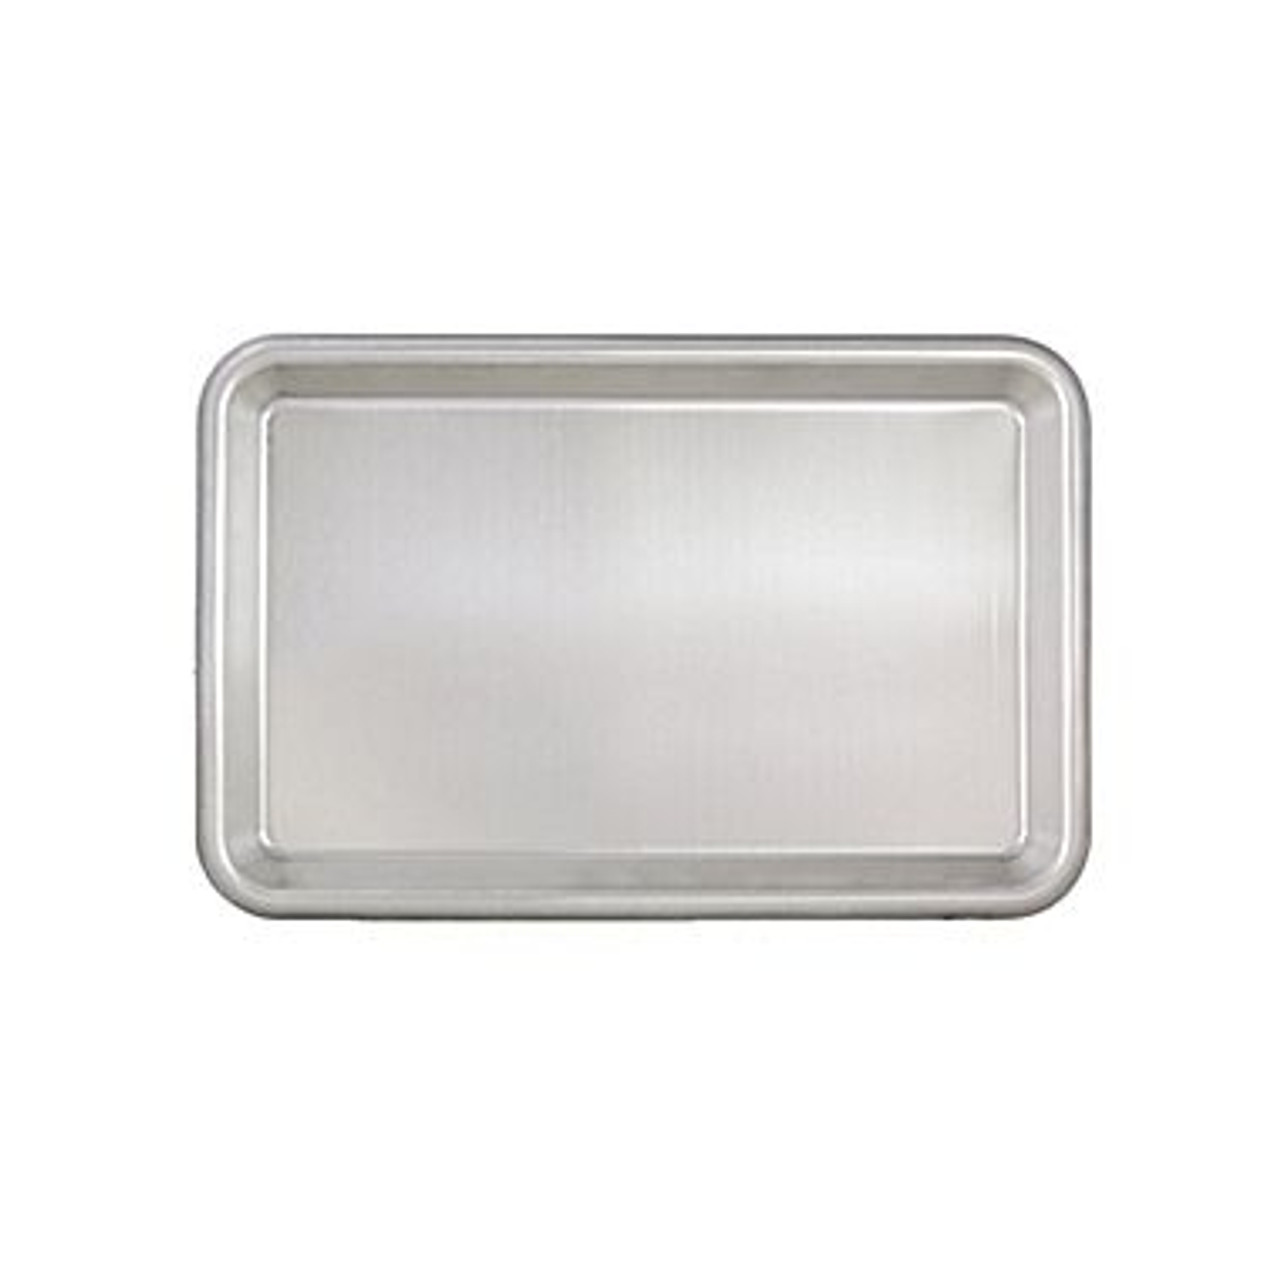 Aluminum Sheet Pan, Bakeware